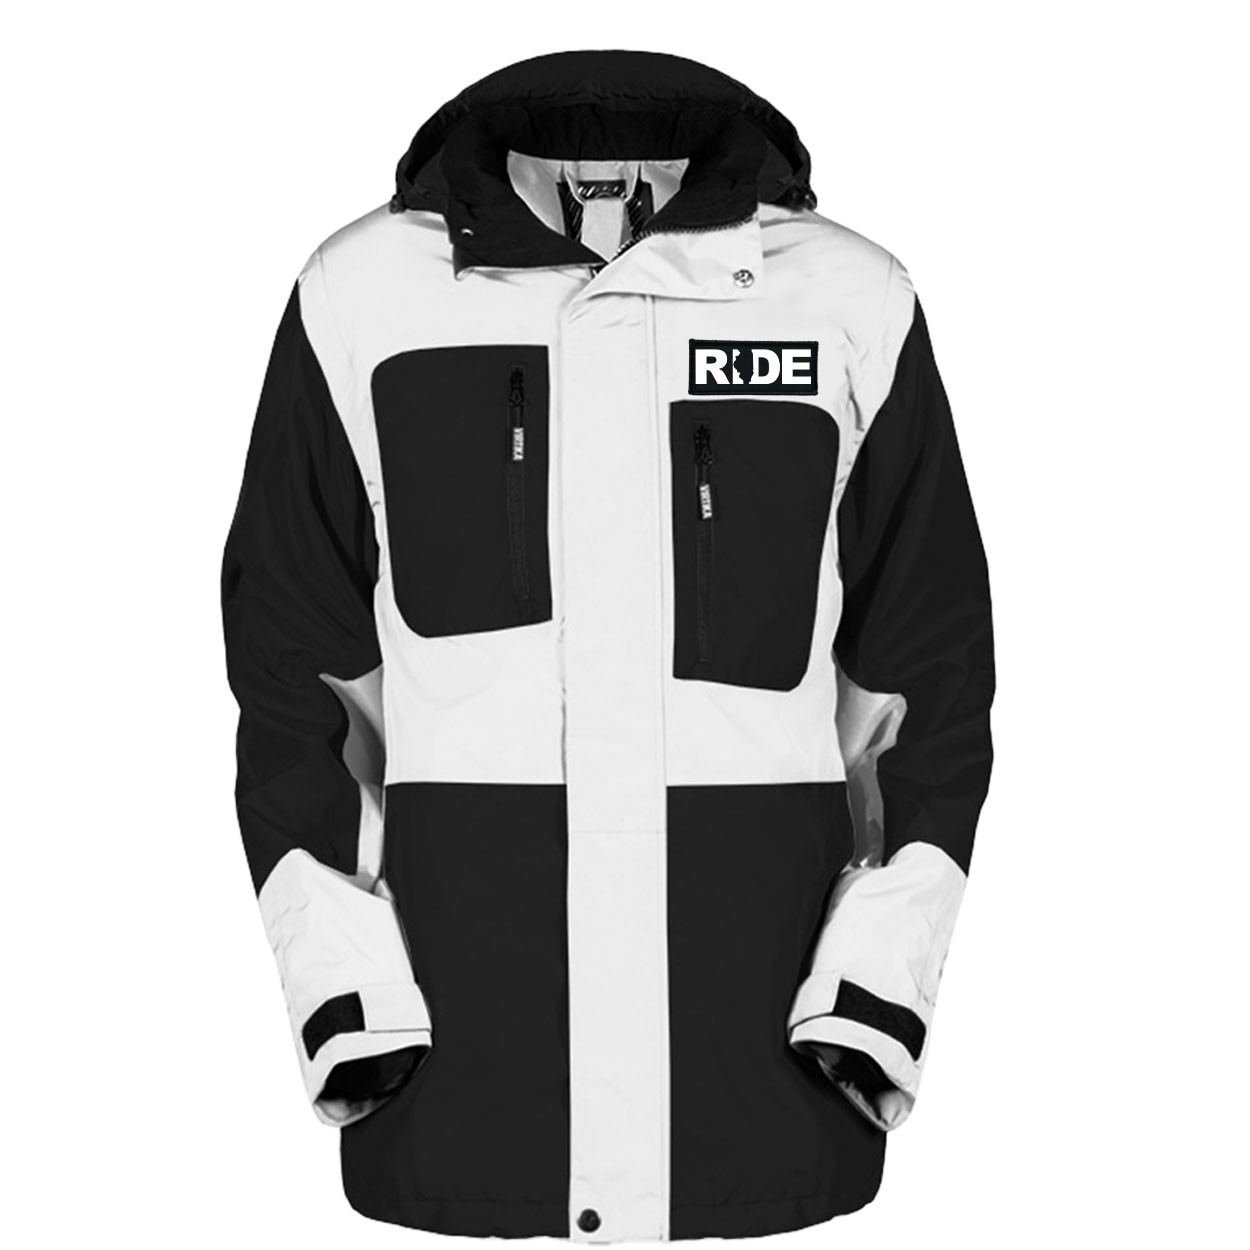 Ride Illinois Pro Waterproof Breathable Winter Virtika Jacket Black/White (White Logo)